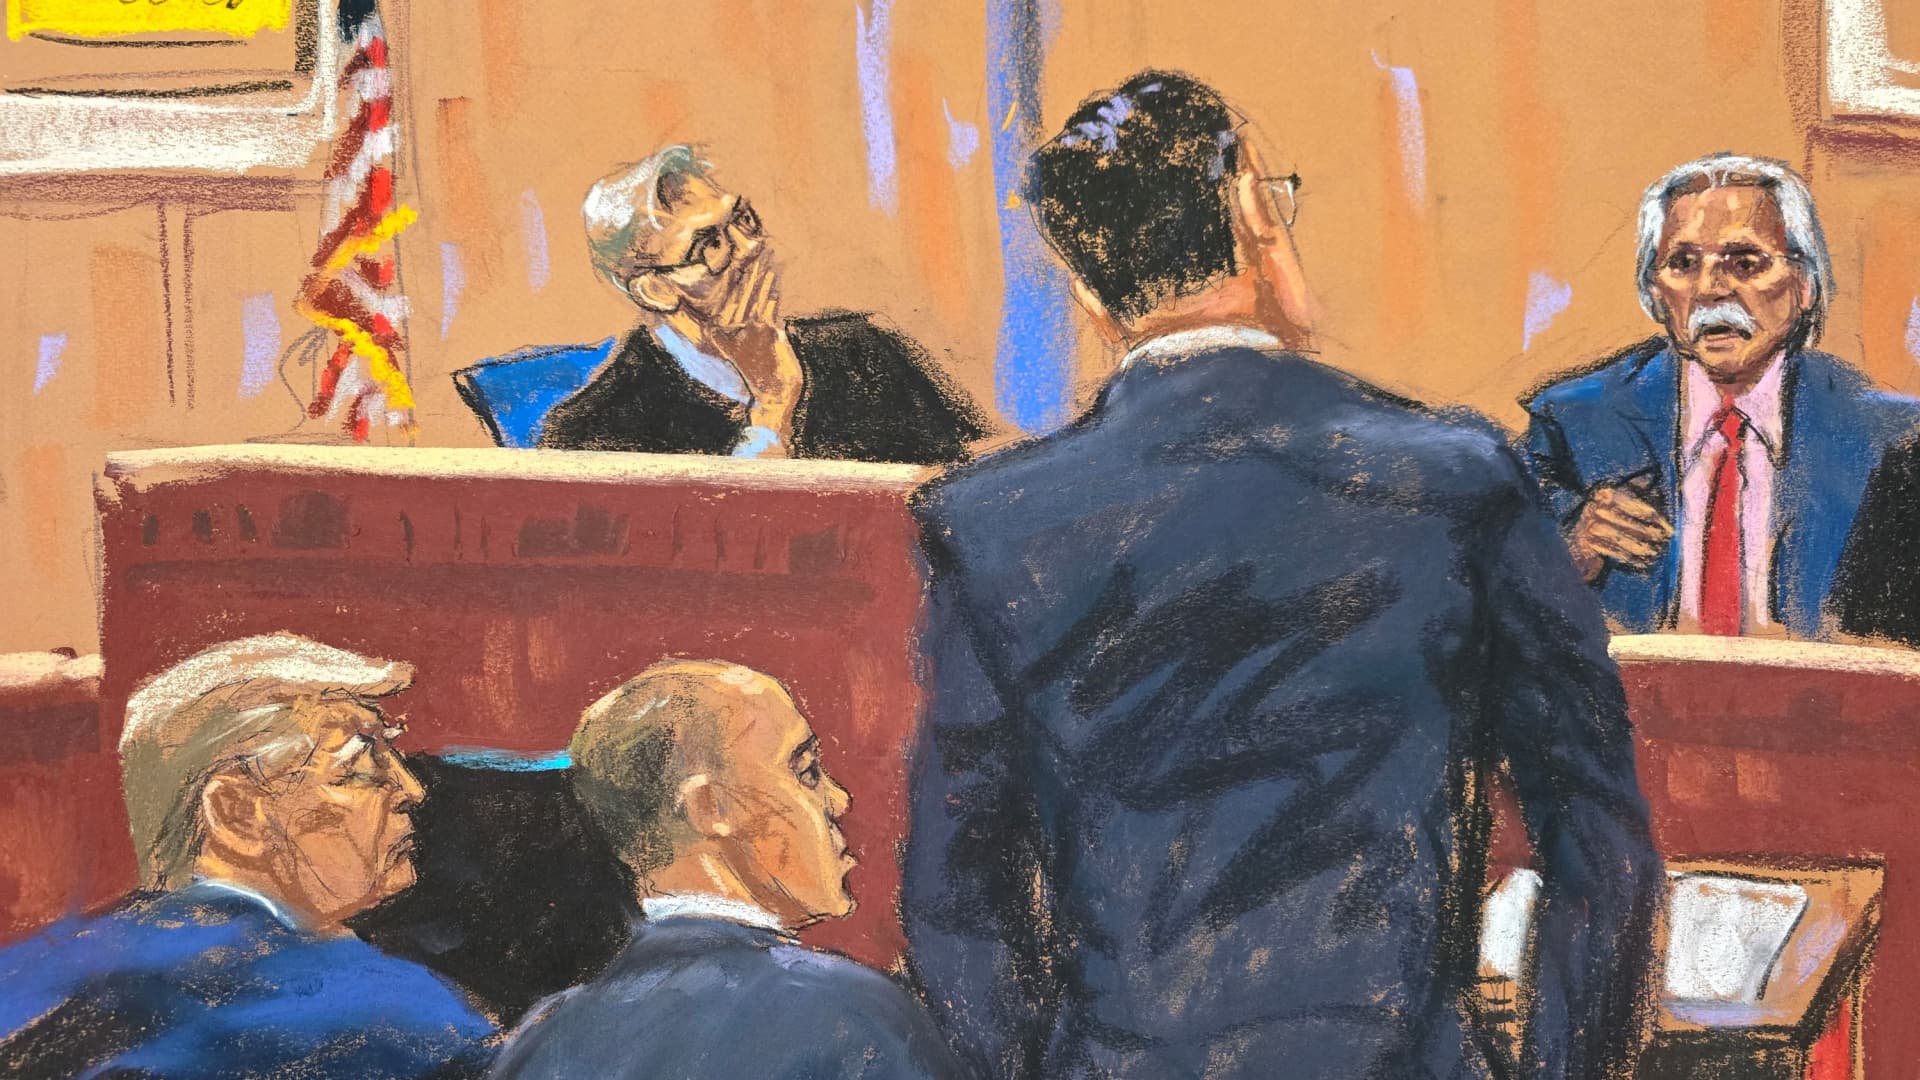 Trump trial: Defense attorneys begin cross-examination of David Pecker